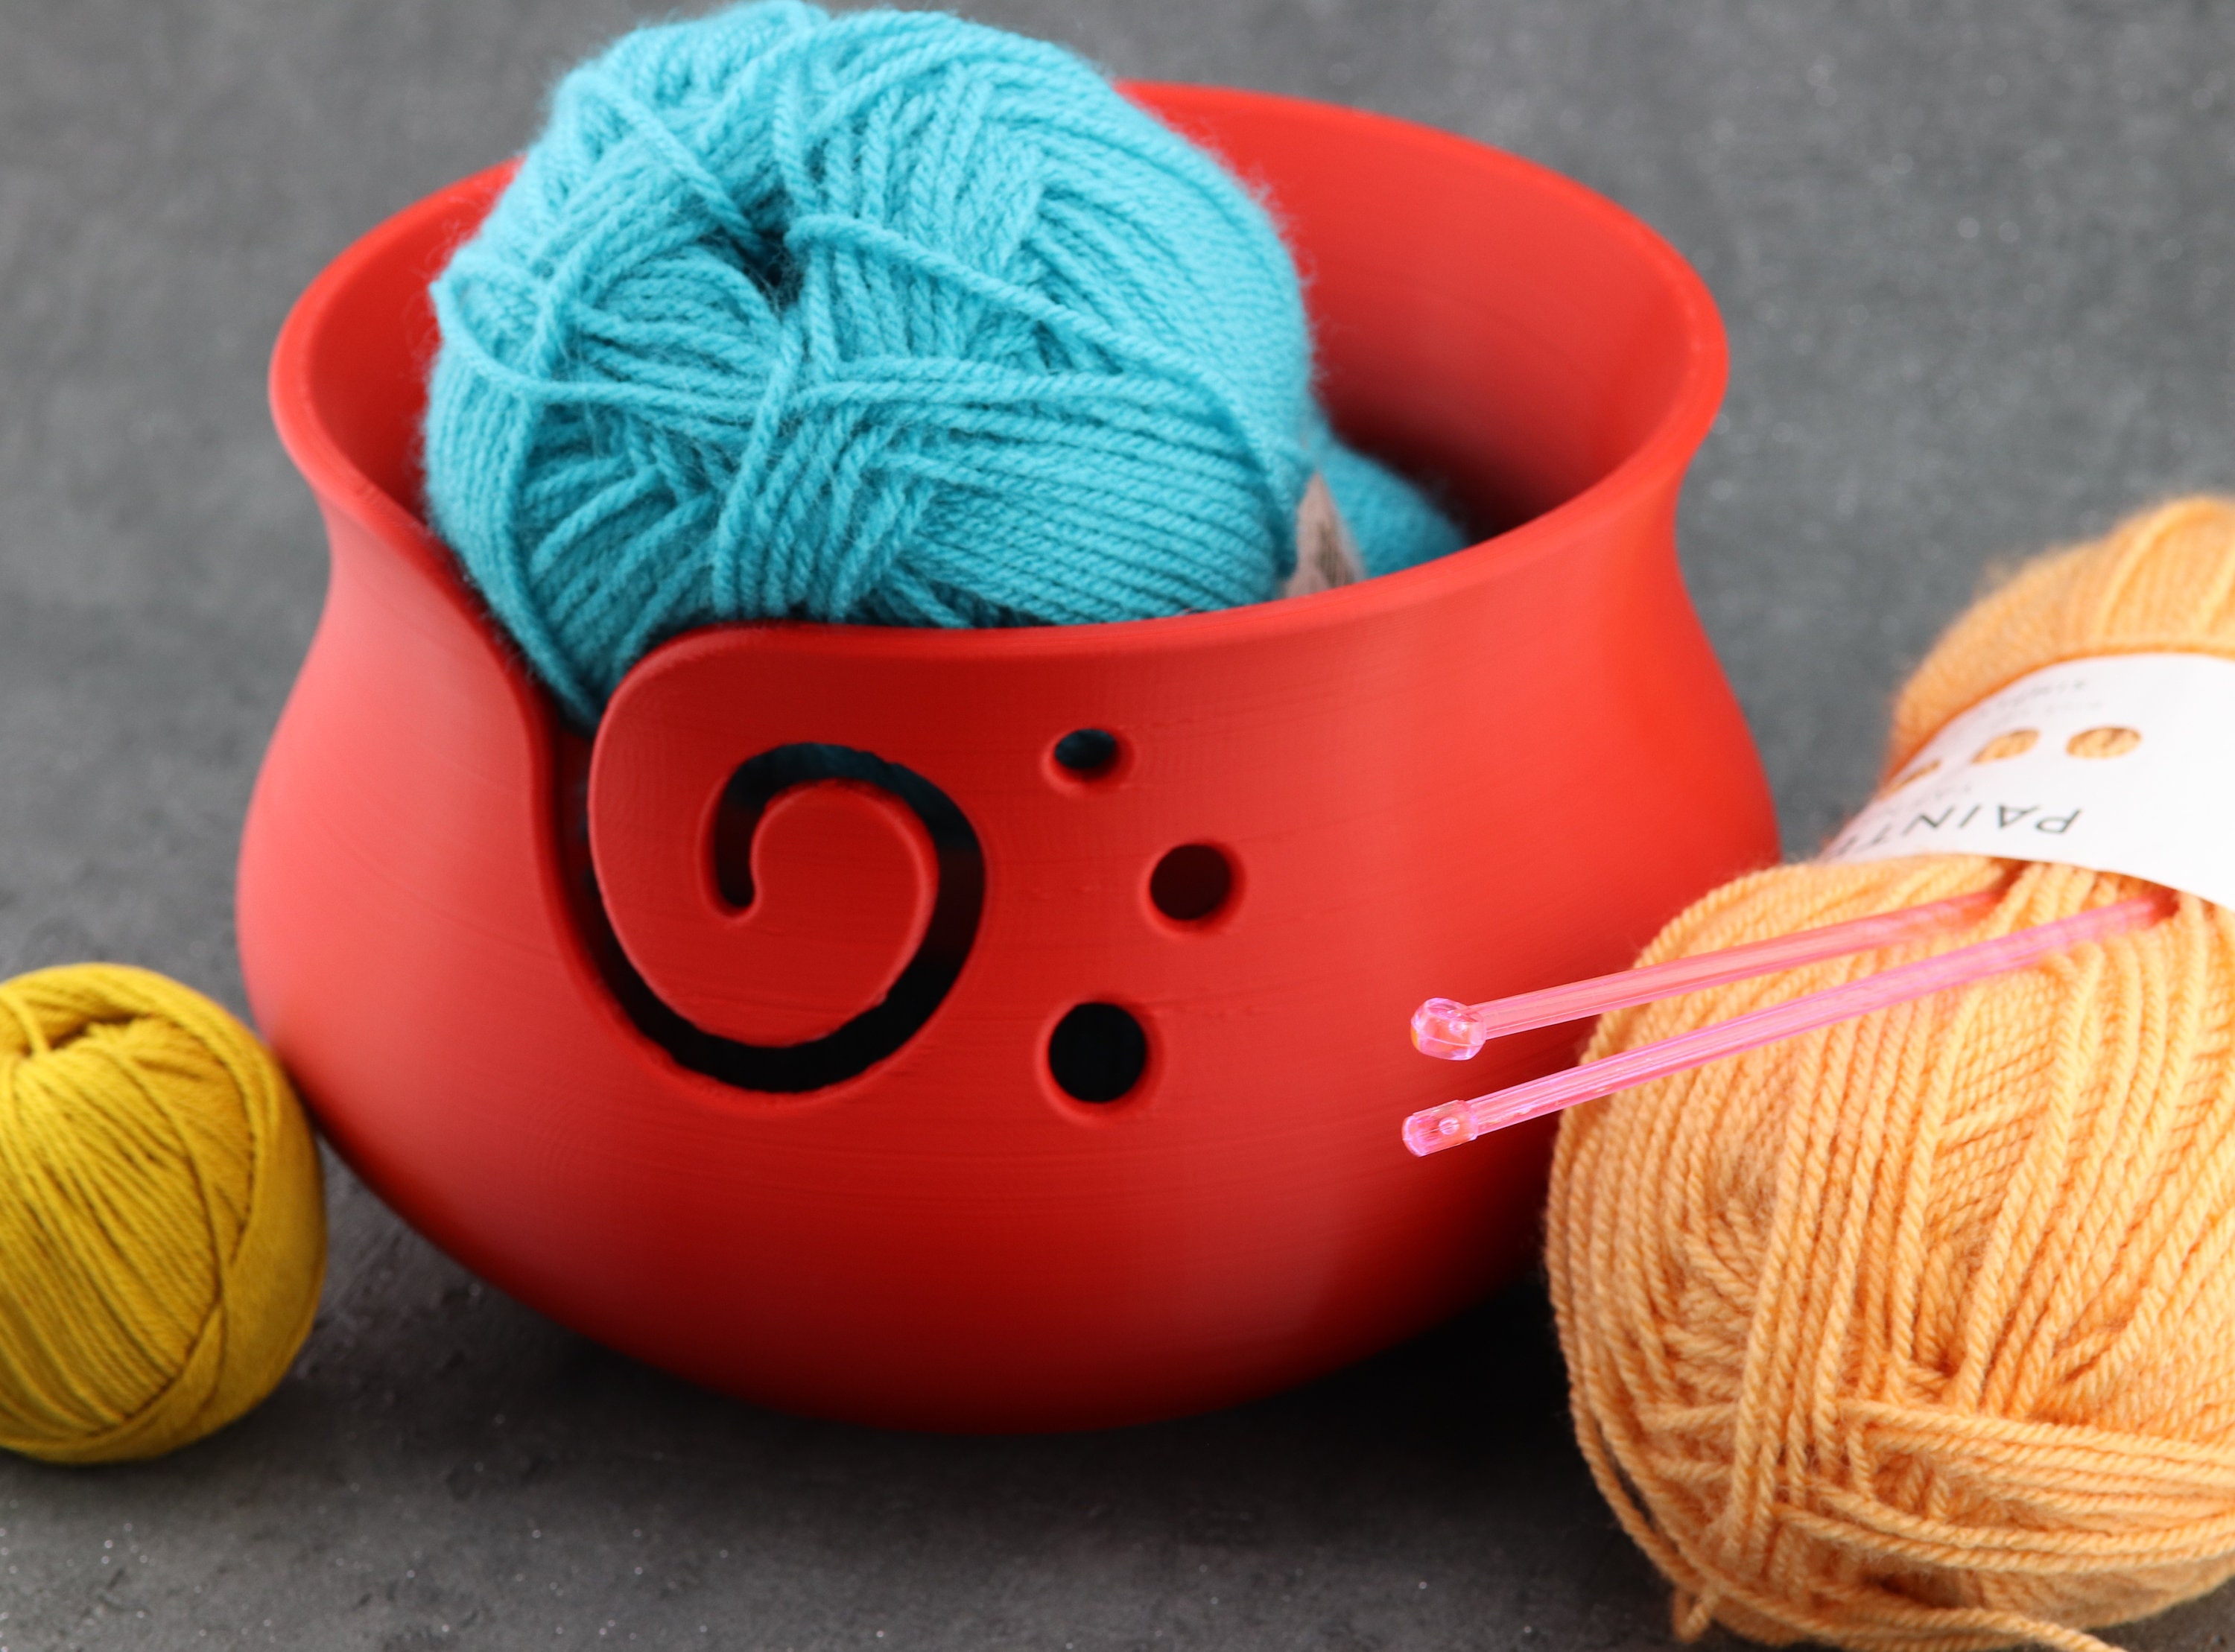 Bamboo Yarn Bowl for Knitting Projects - Large Yarn Bowl Size 6 X 4 inch -  Yarn Bowls for Crocheting - Portable Crochet Bowl - Functional Yarn Ball